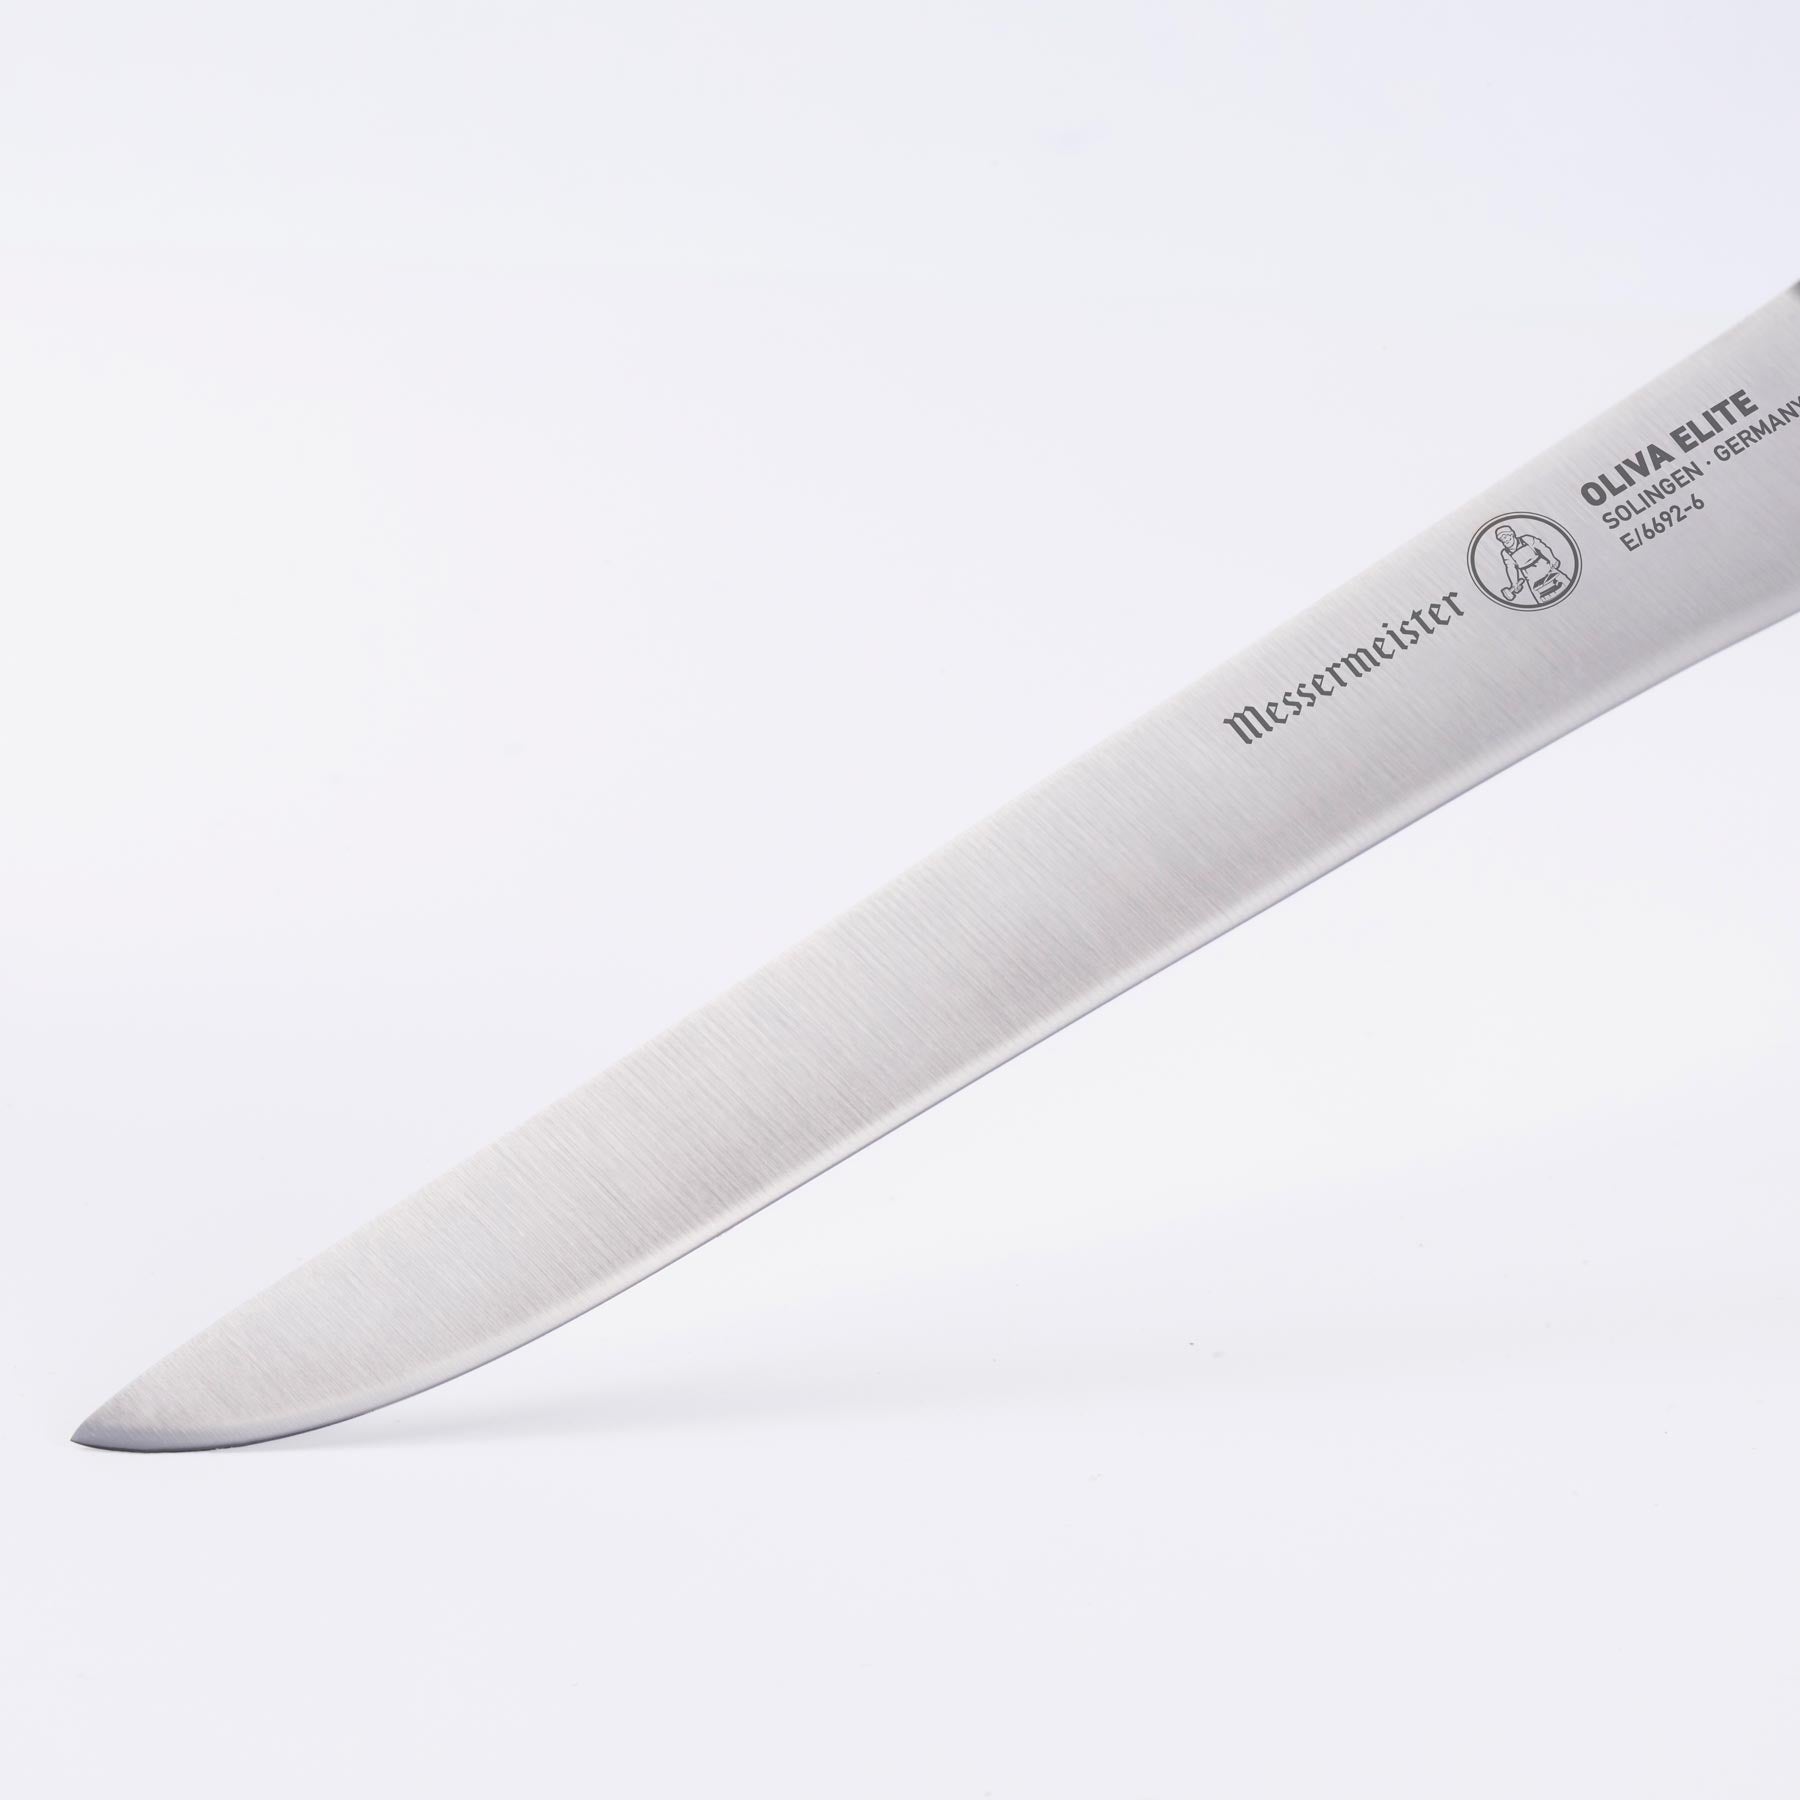 Oliva Elite 6 Inch Flexible Boning Knife